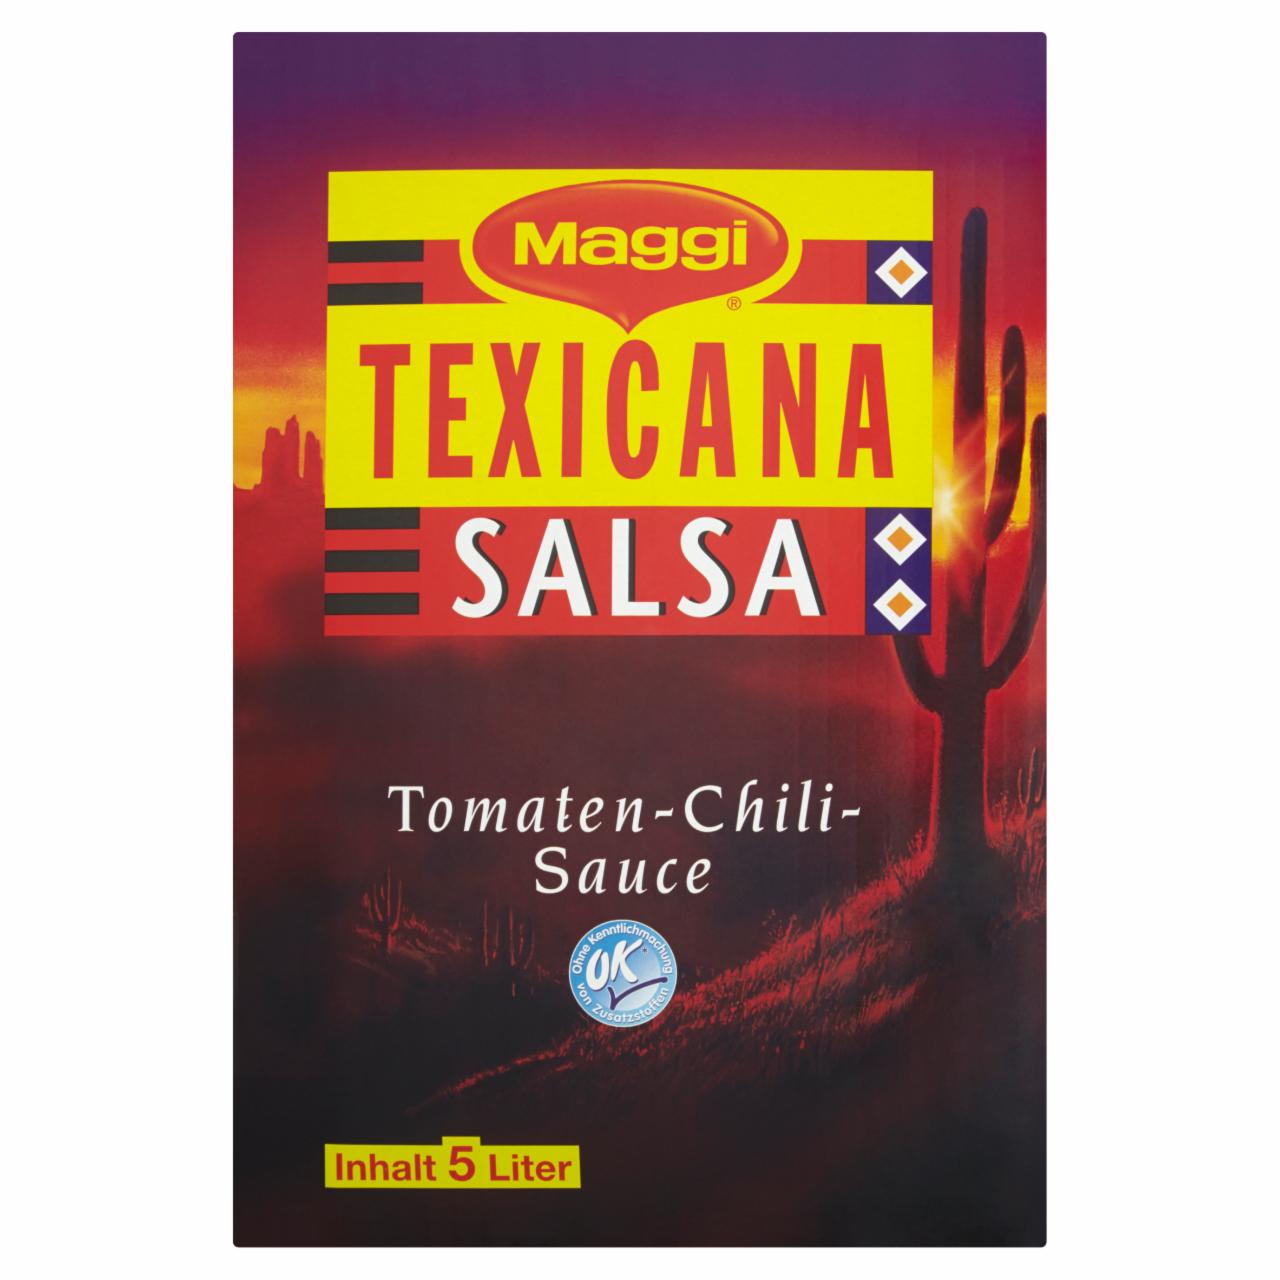 Zdjęcia - Maggi Texicana Salsa Sos pomidorowy chili 5 l